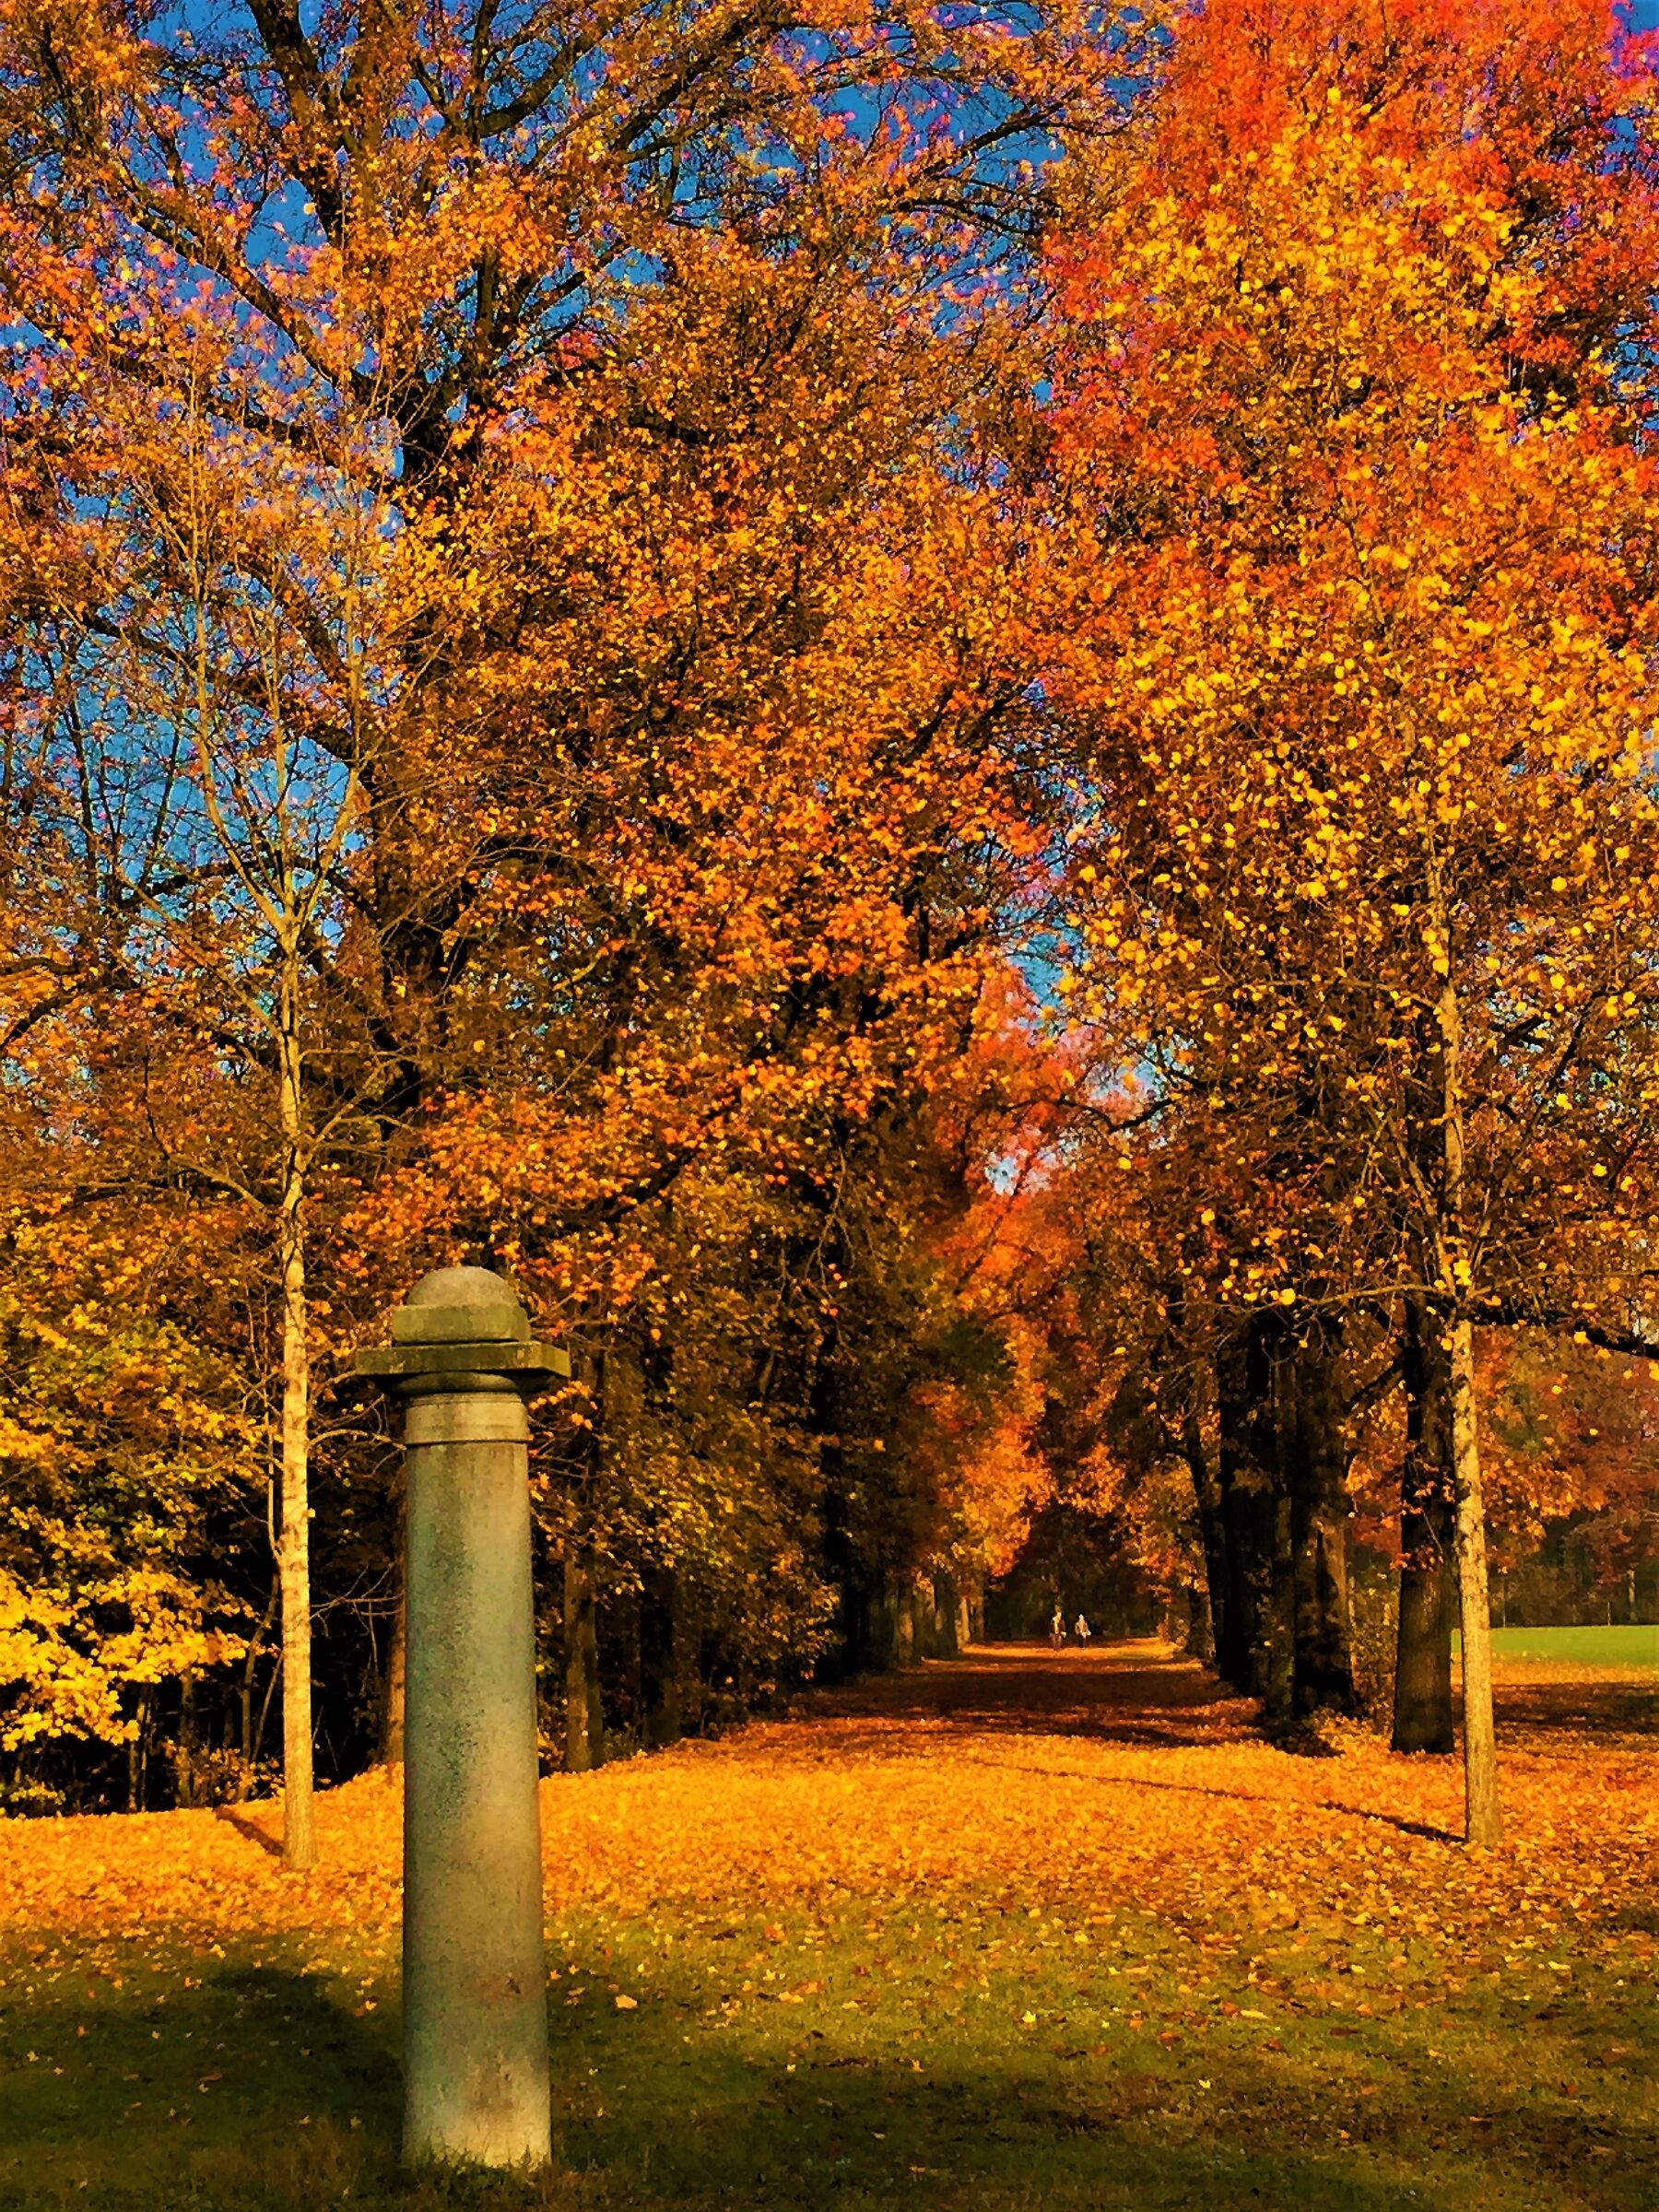 Autumn in the park...